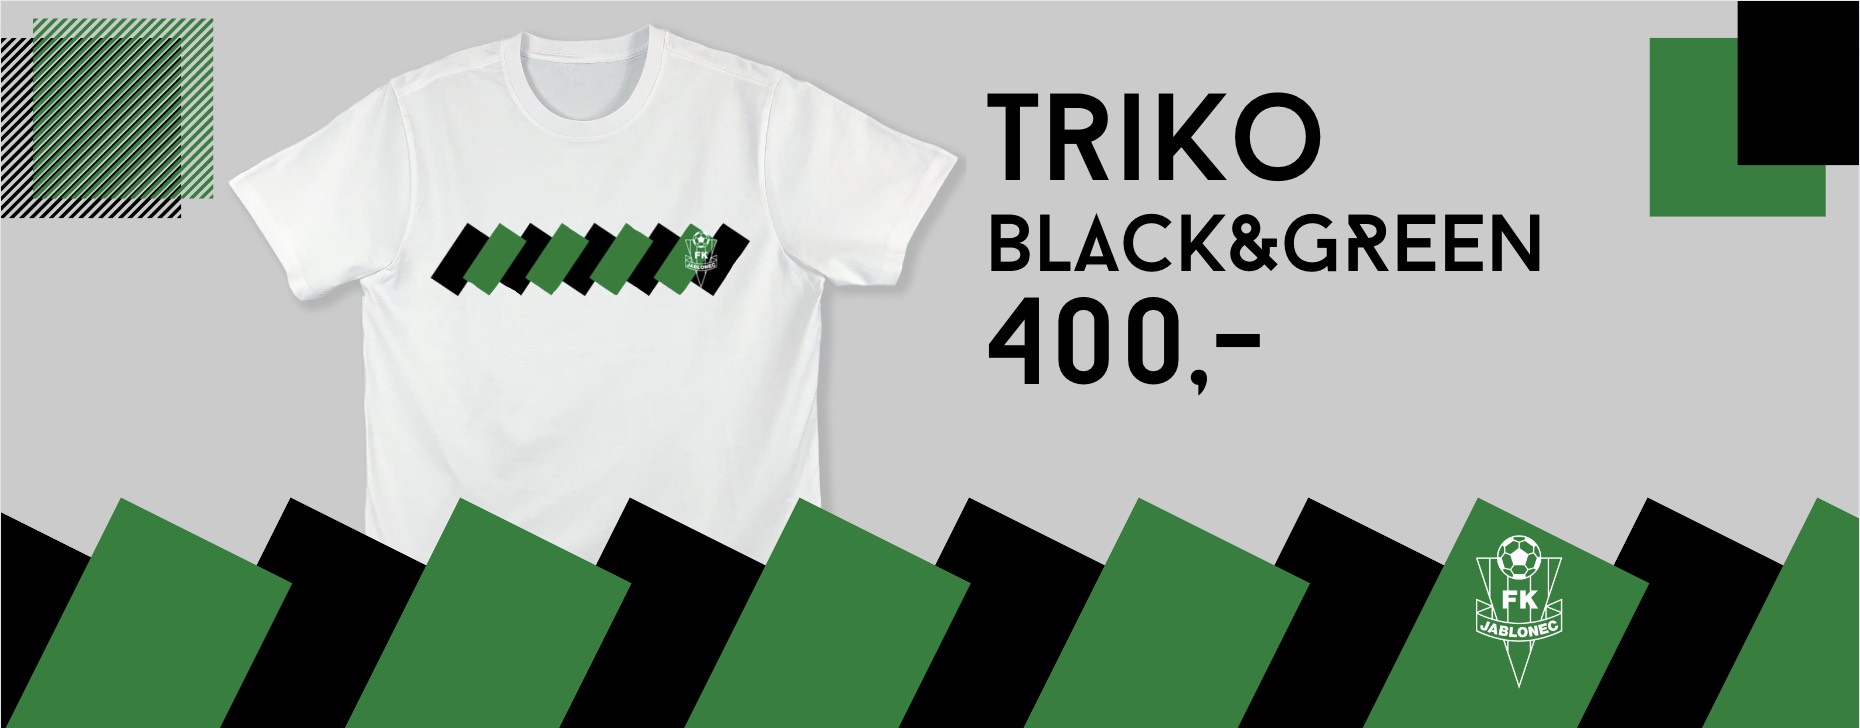 Triko BLACK&GREEN